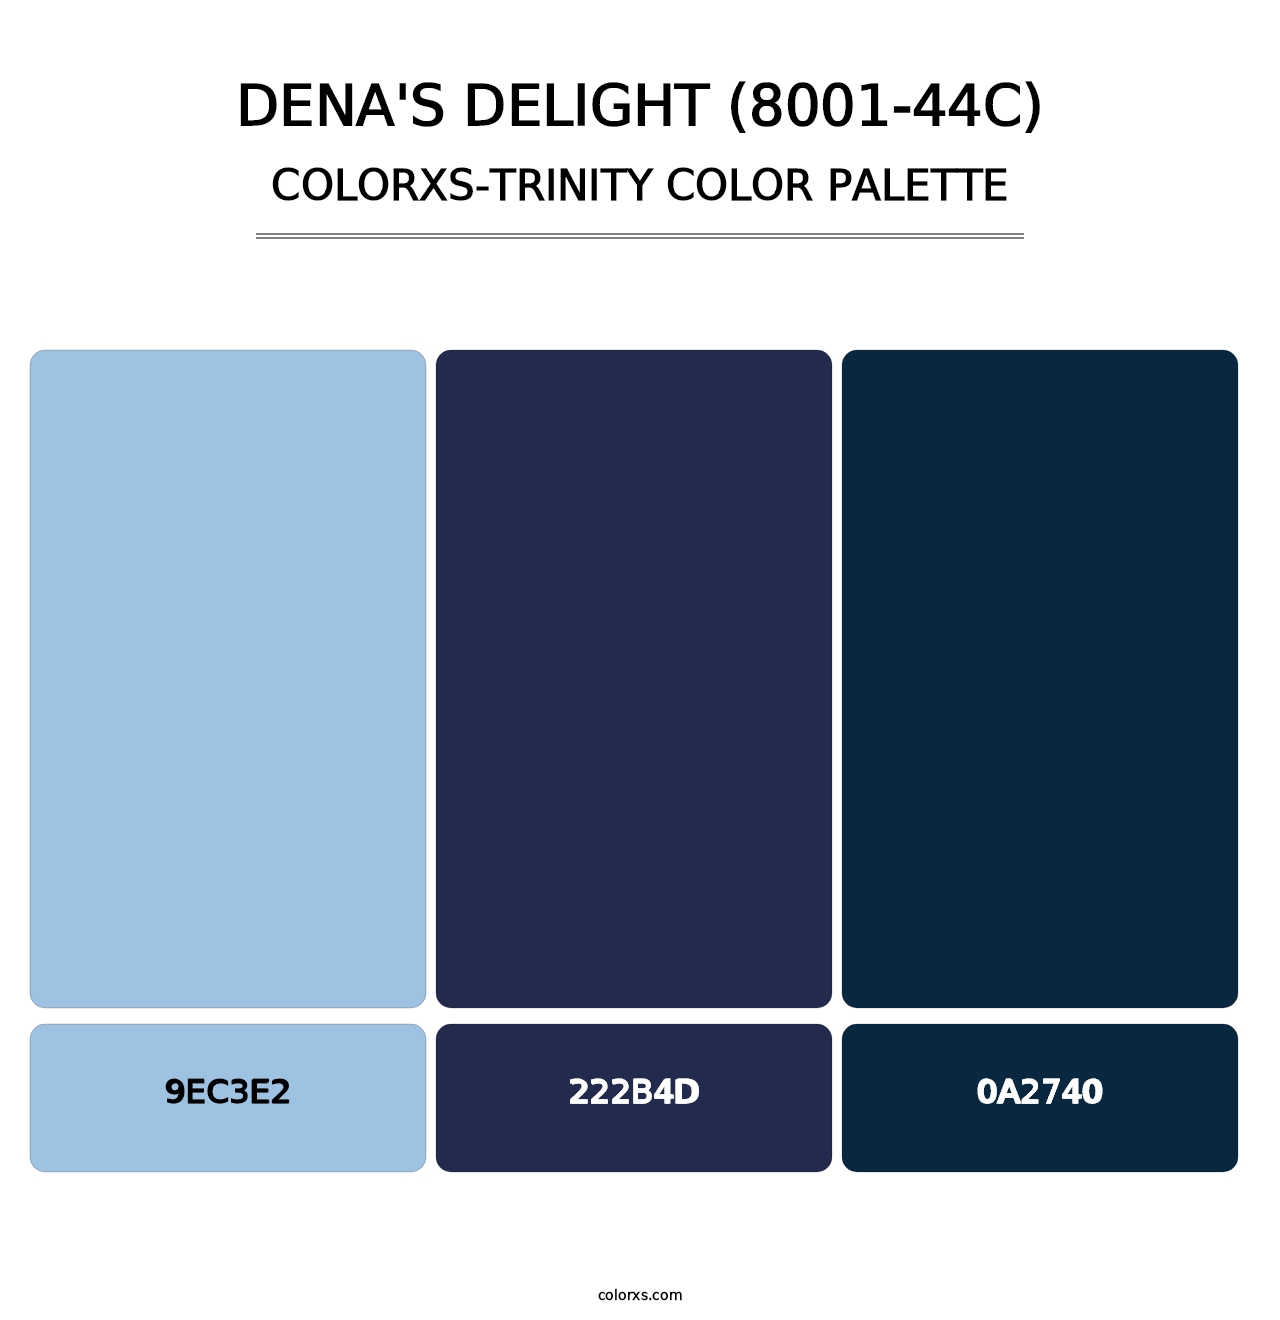 Dena's Delight (8001-44C) - Colorxs Trinity Palette